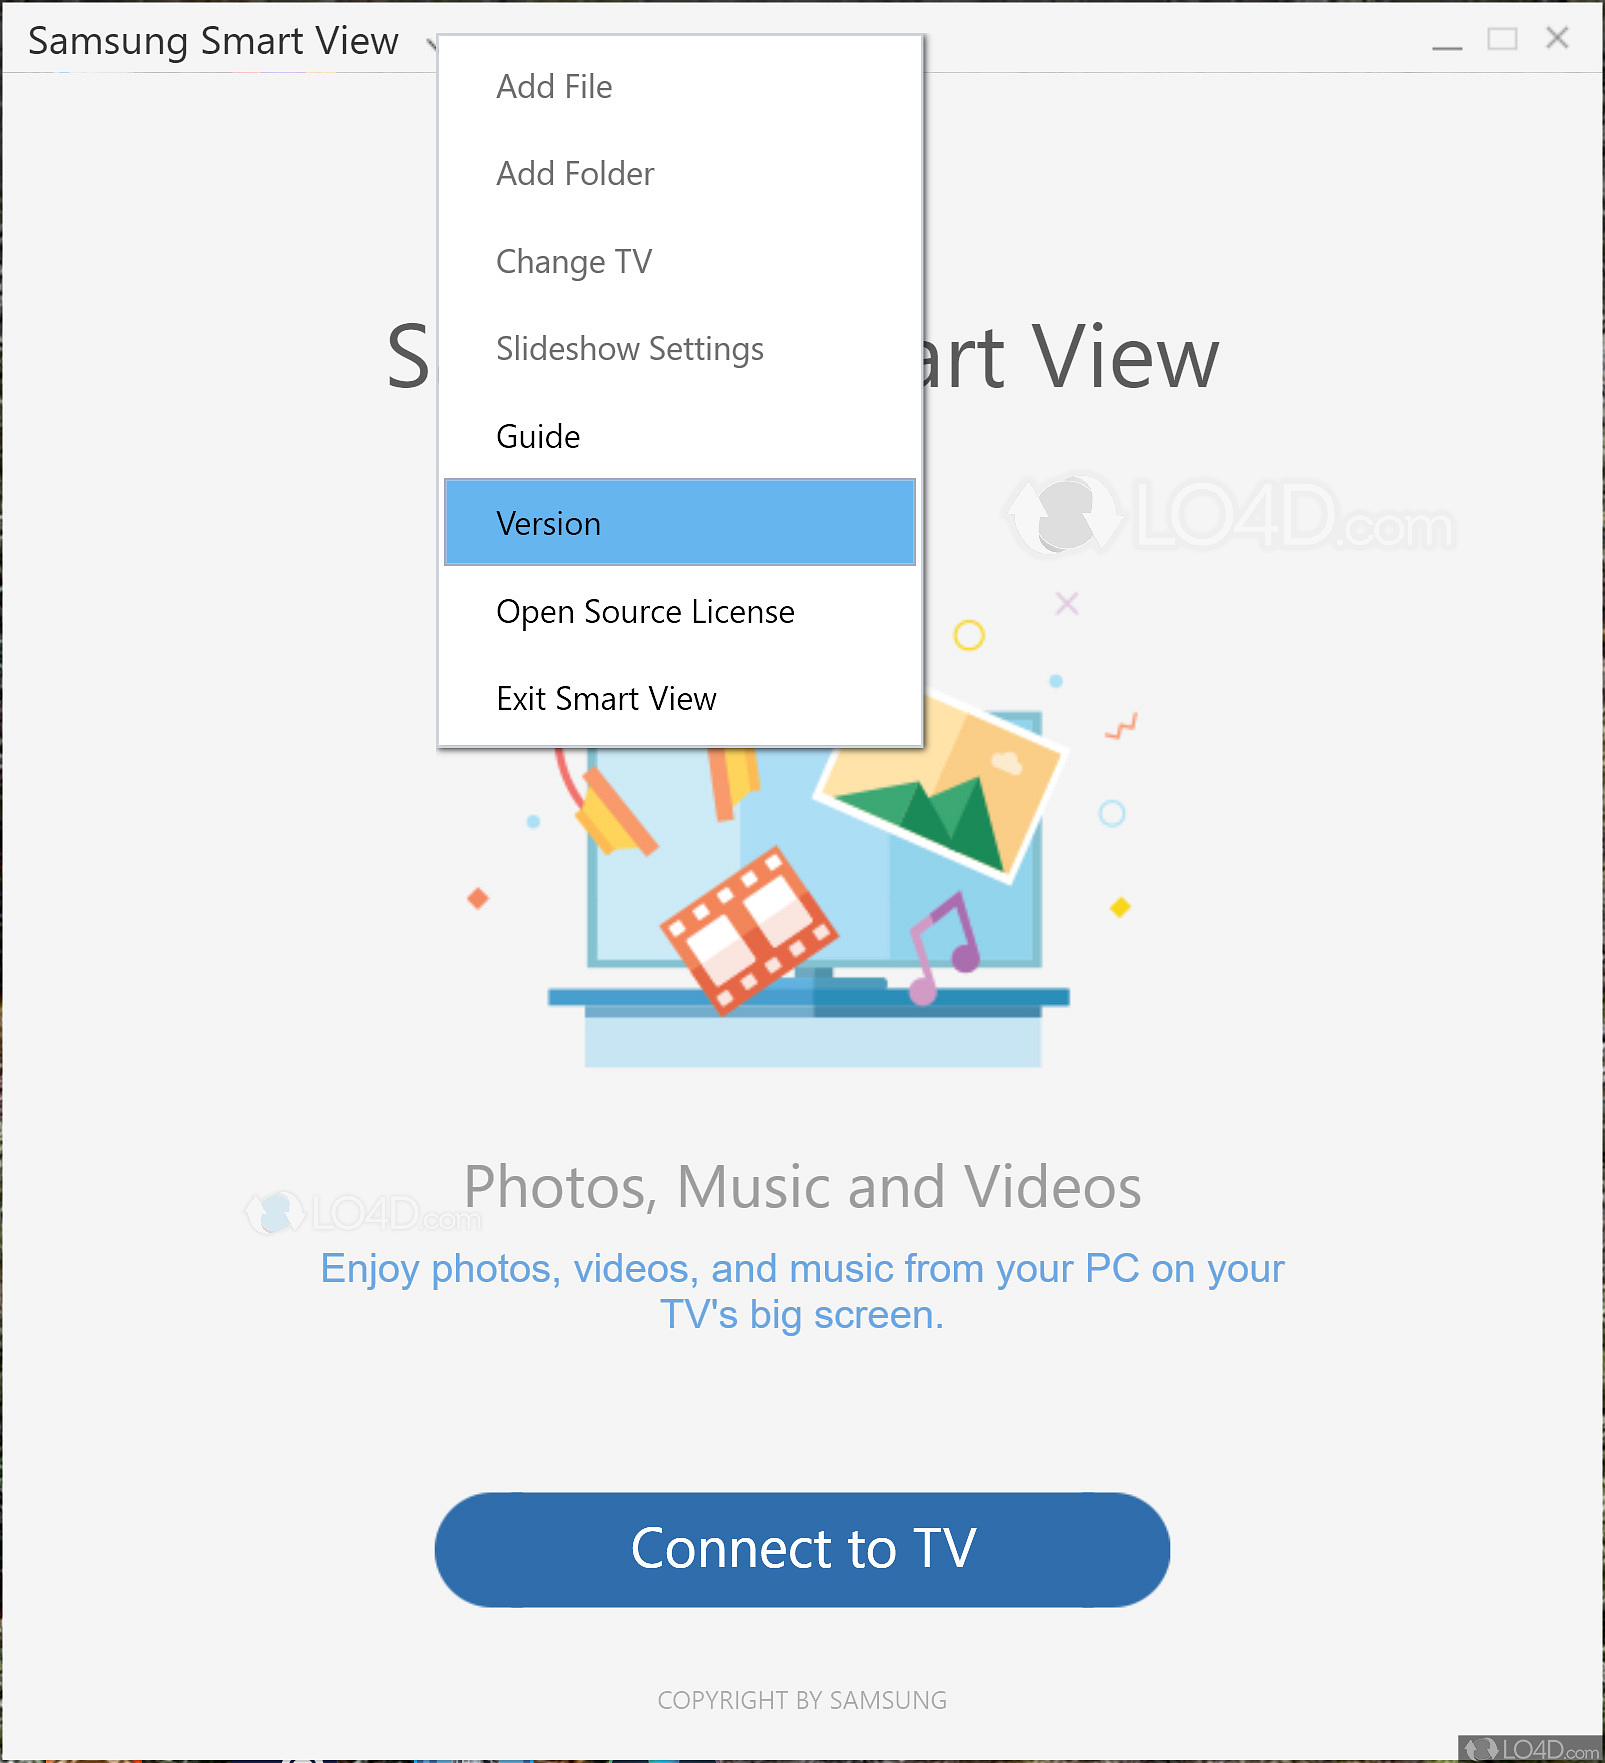 Samsung Smart View - Download
